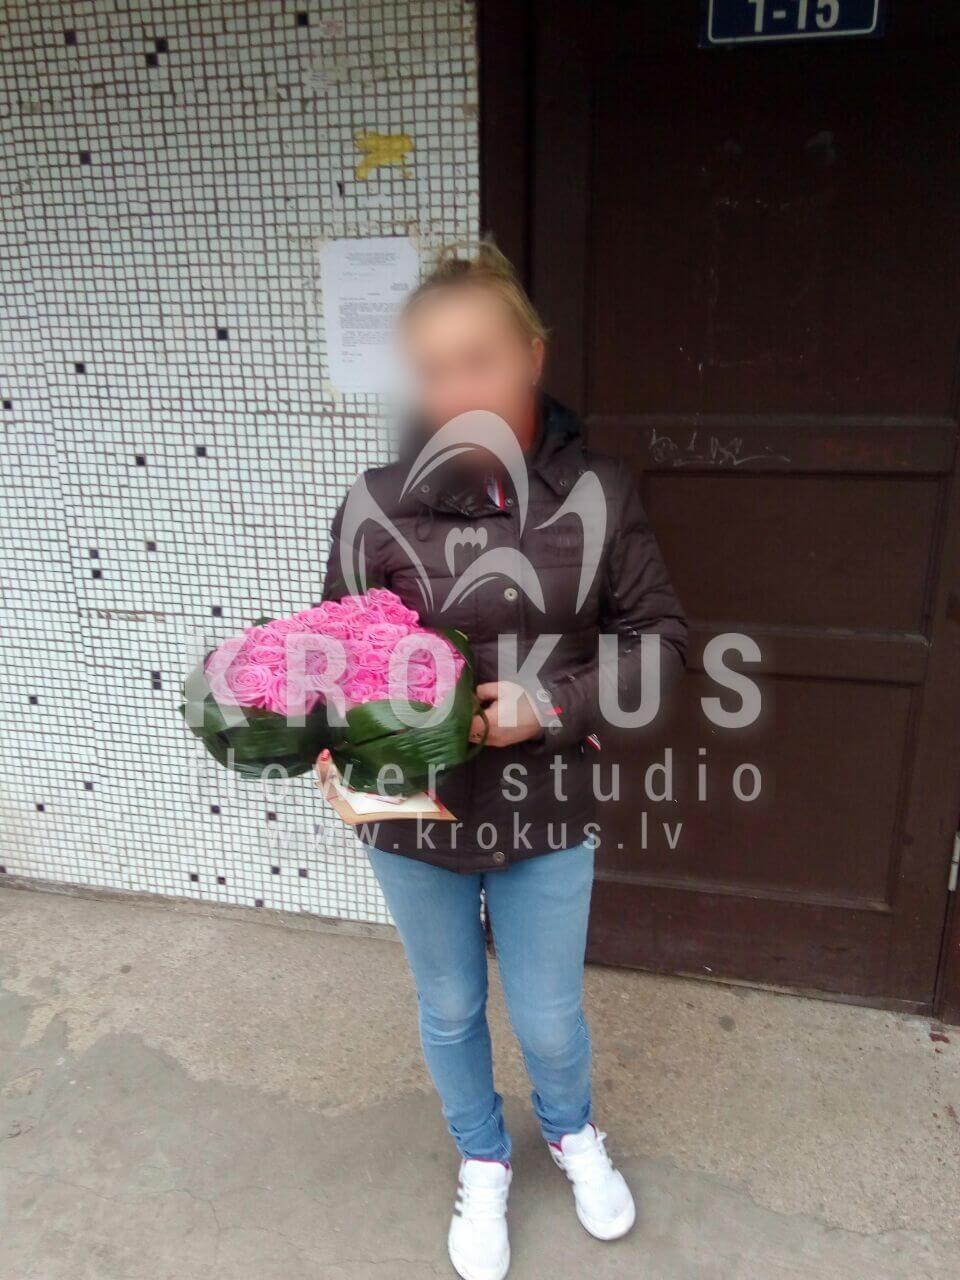 Deliver flowers to Latvia (pink rosesbeargrasssalalaspidistra)